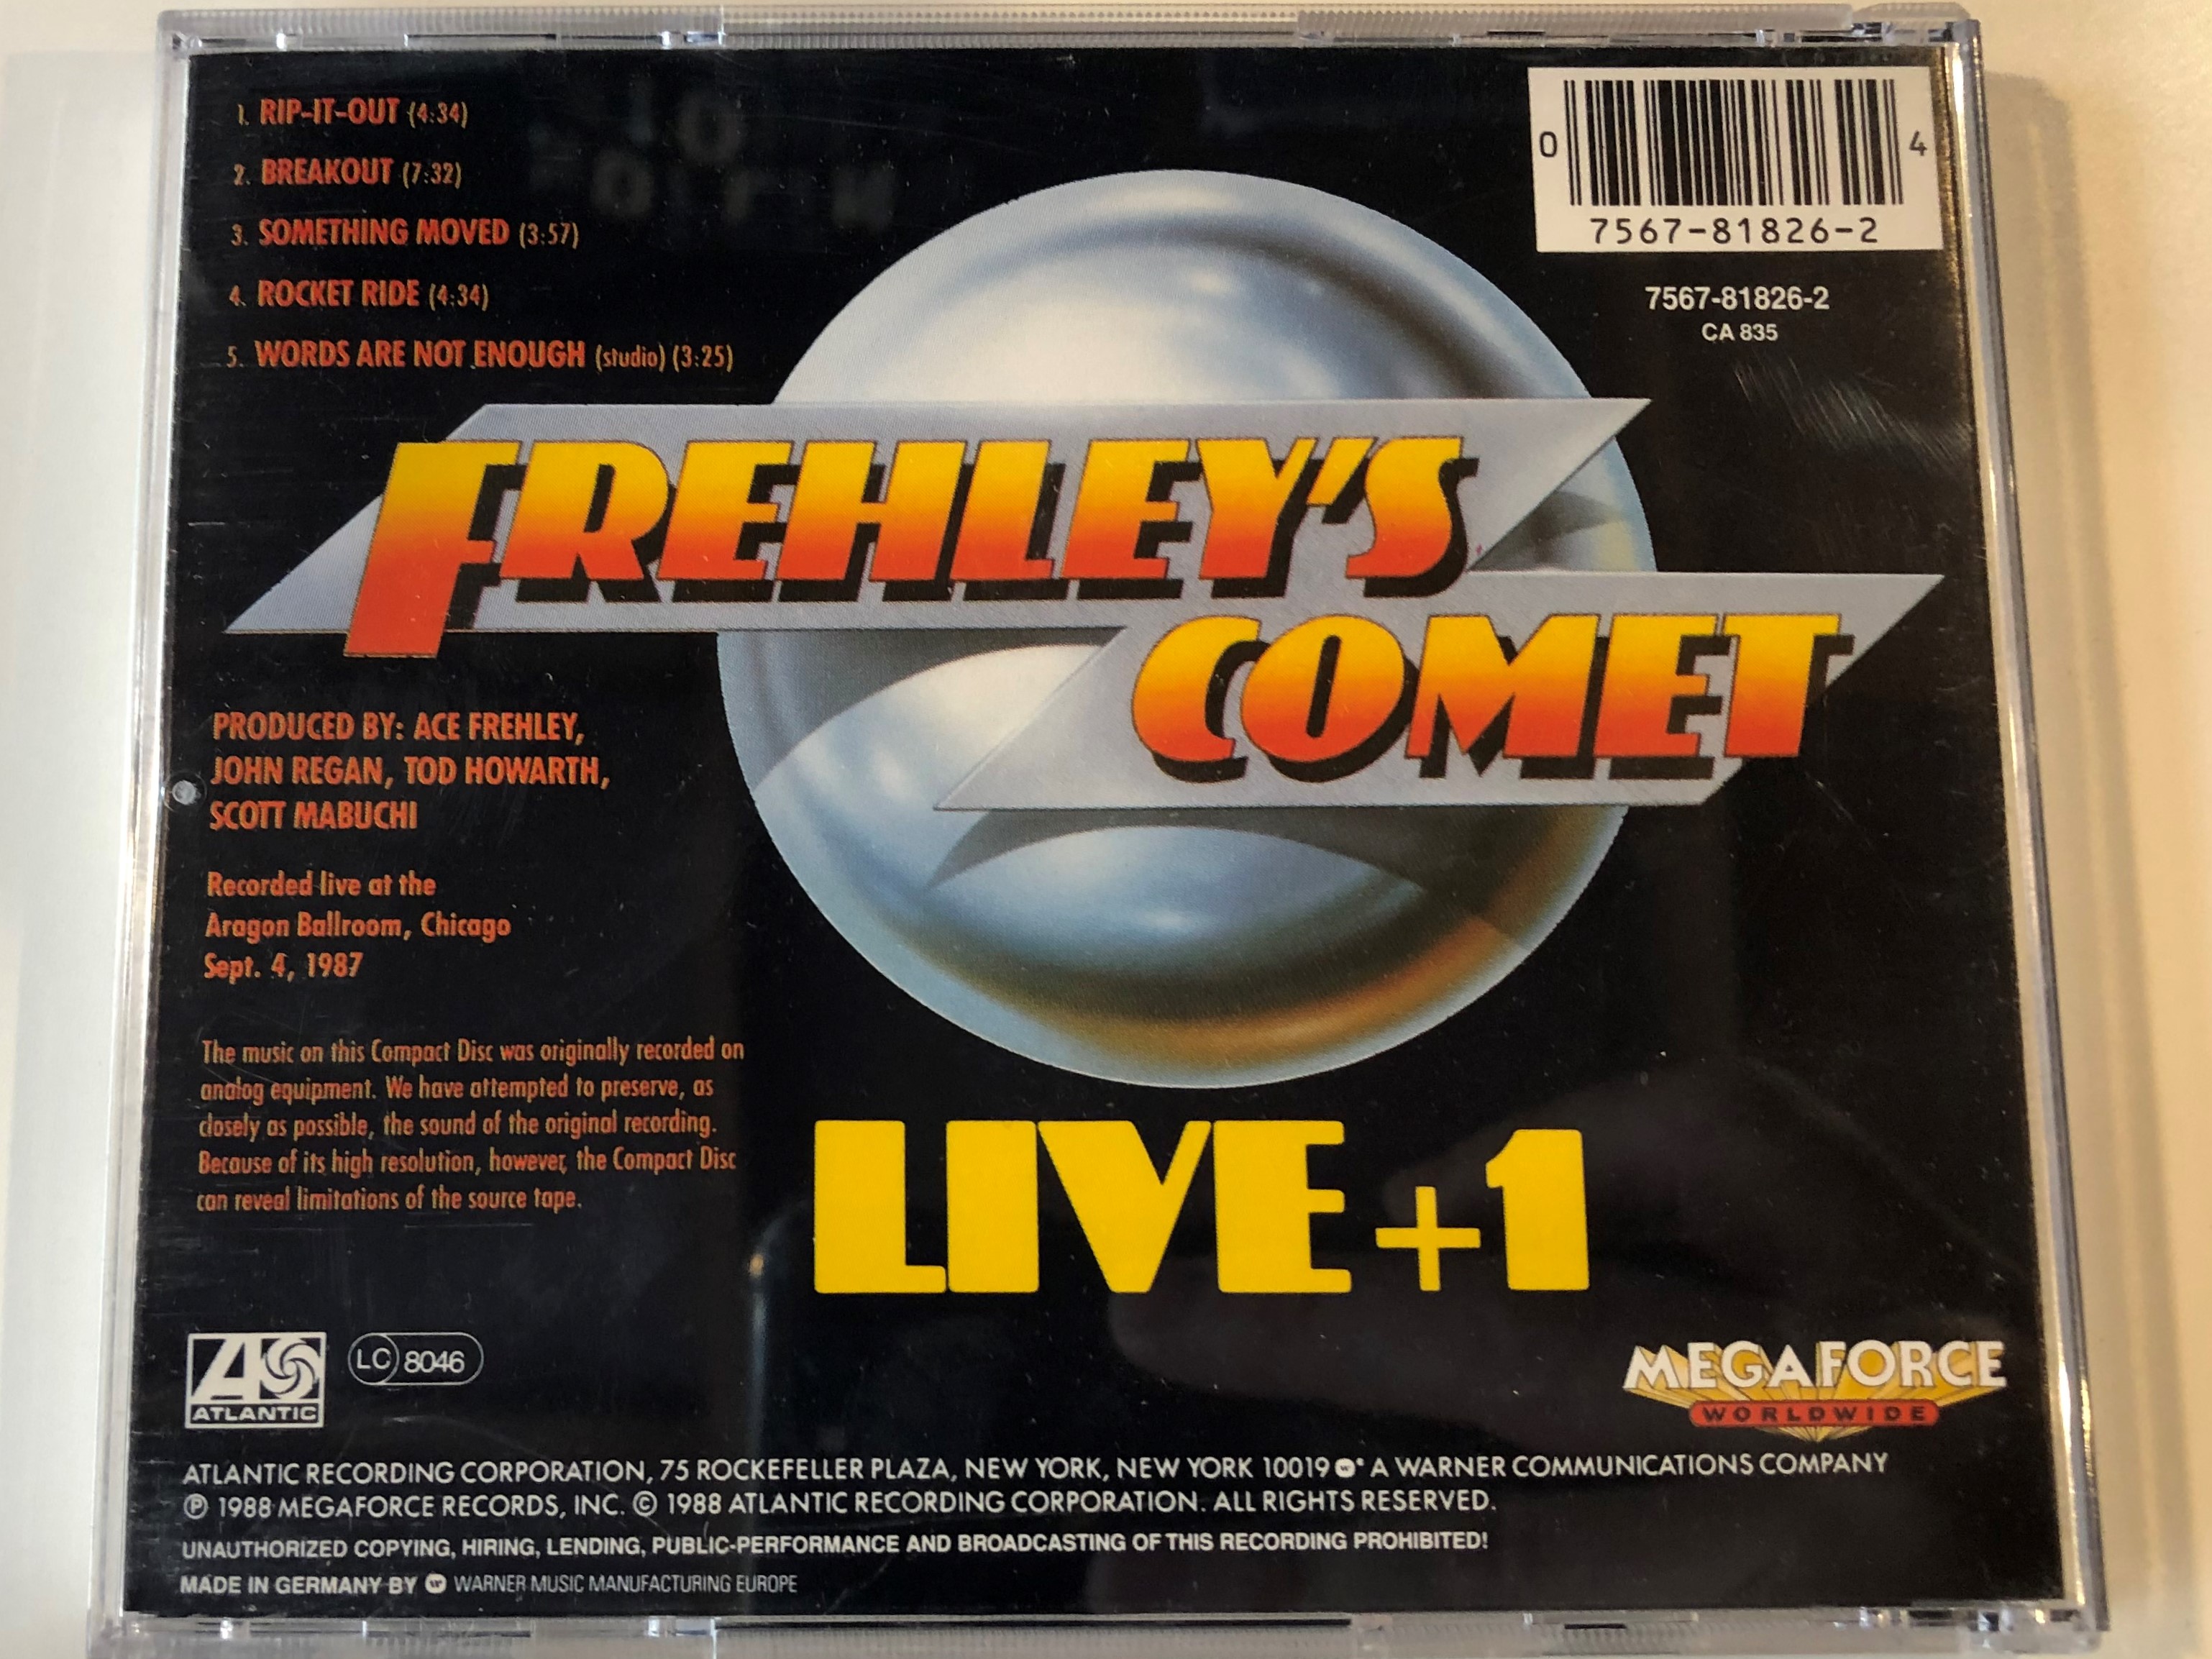 frehley-s-comet-live-1-megaforce-worldwide-audio-cd-1988-7567-81826-2-2-.jpg